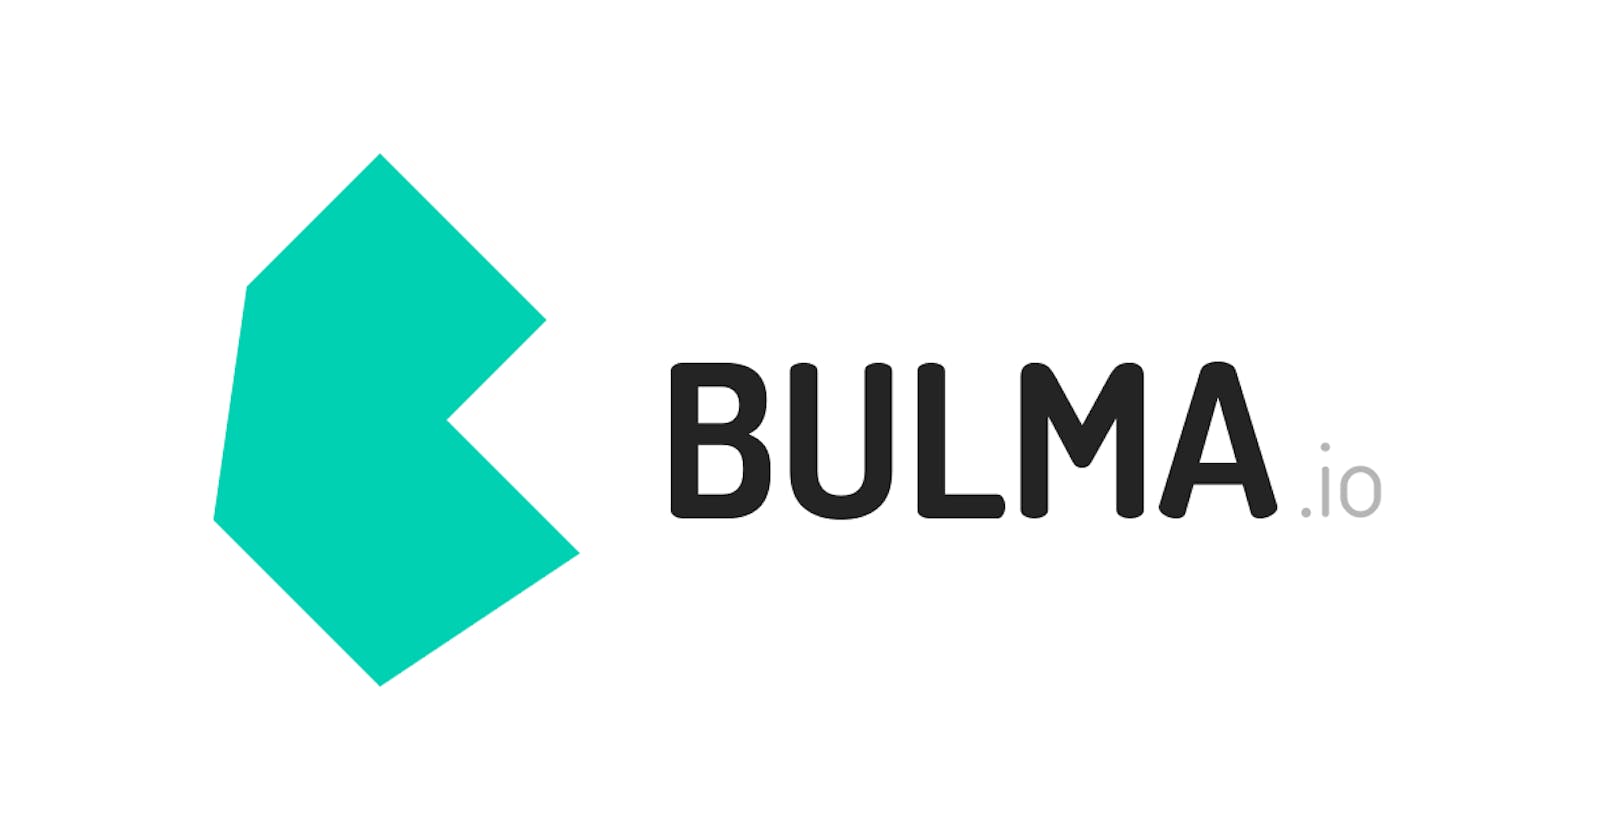 Bulma - The Most Underrated Framework of the CSS Framework Era